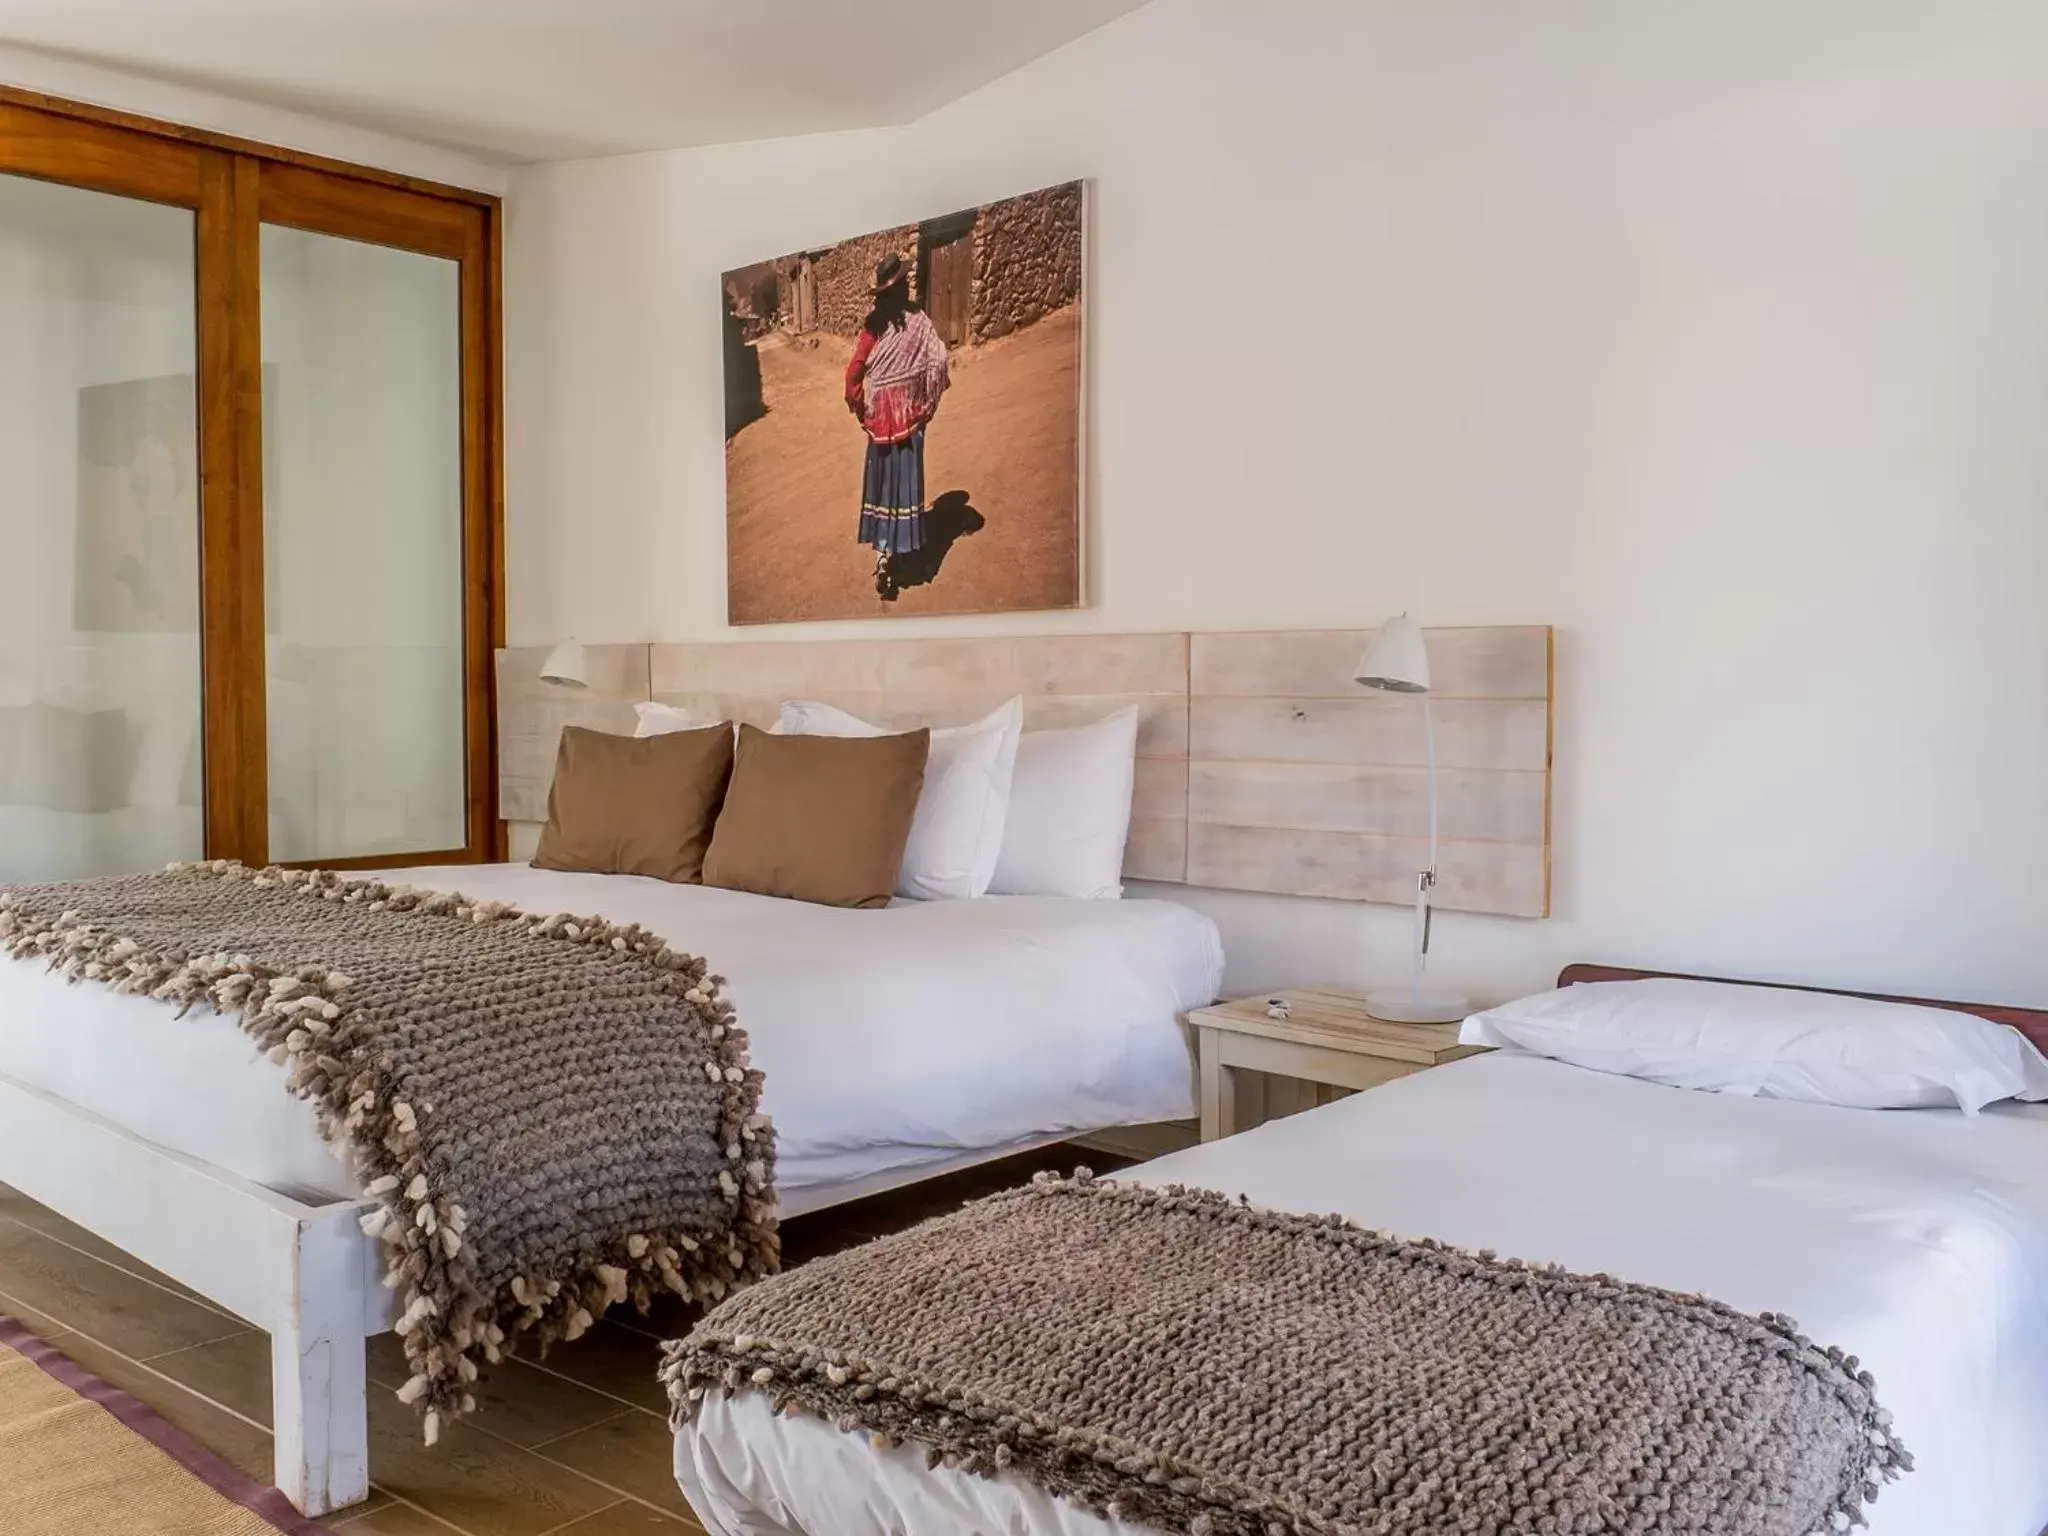 Suite Queen Room - single occupancy in NOI Casa Atacama